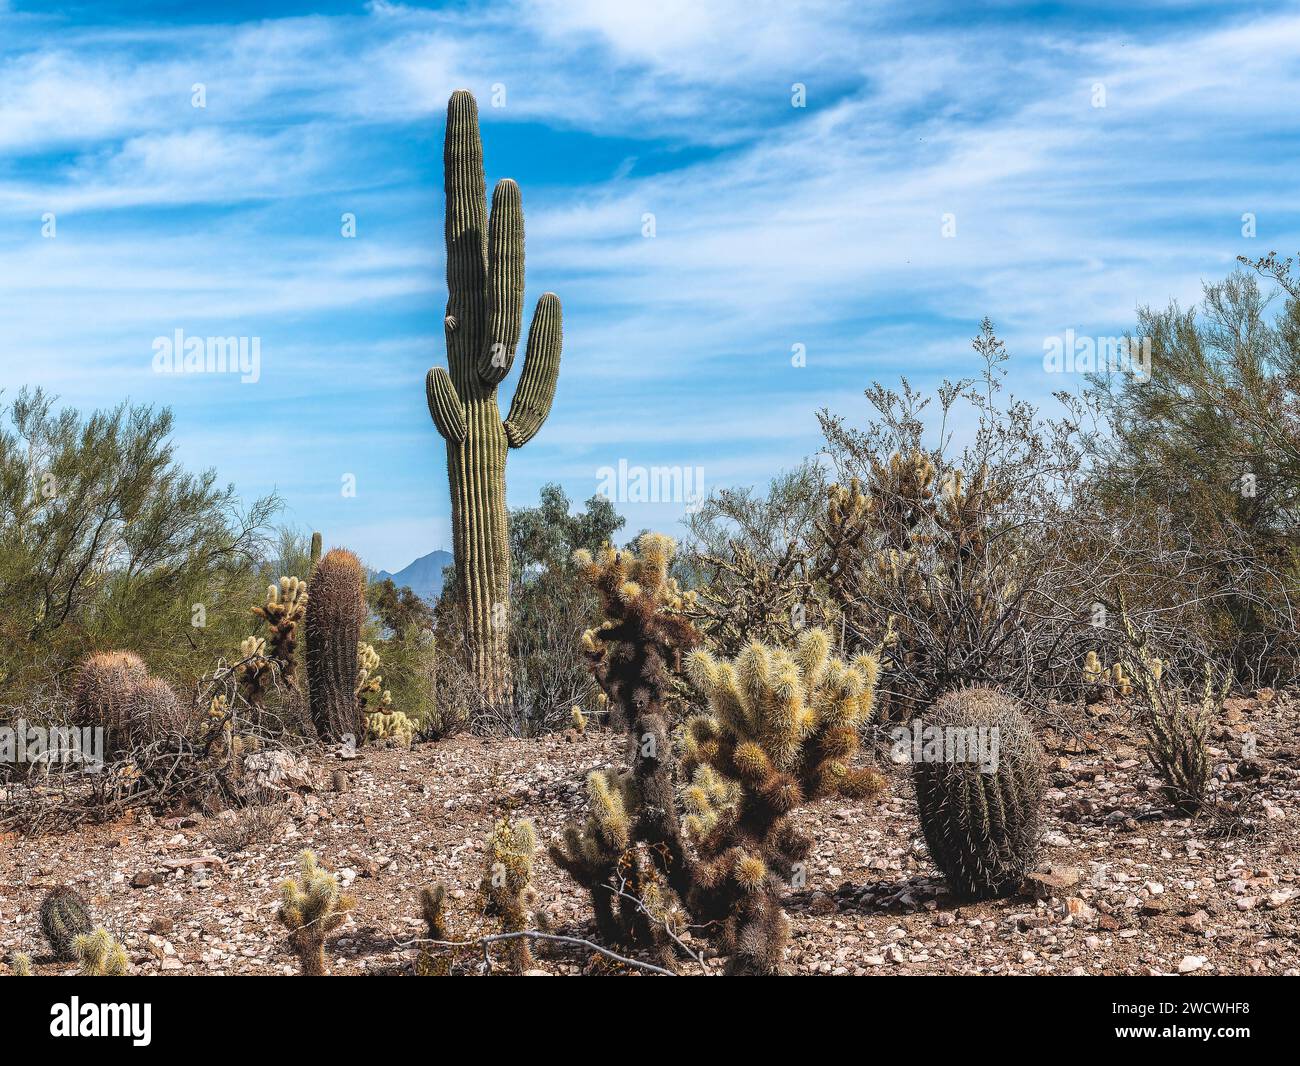 Phoenix/Arizona: Cuarto De Niños De La Planta De Desierto - Cactus Maduros  Del Saguaro Para La Venta Foto de archivo - Imagen de desierto, vivero:  105198990